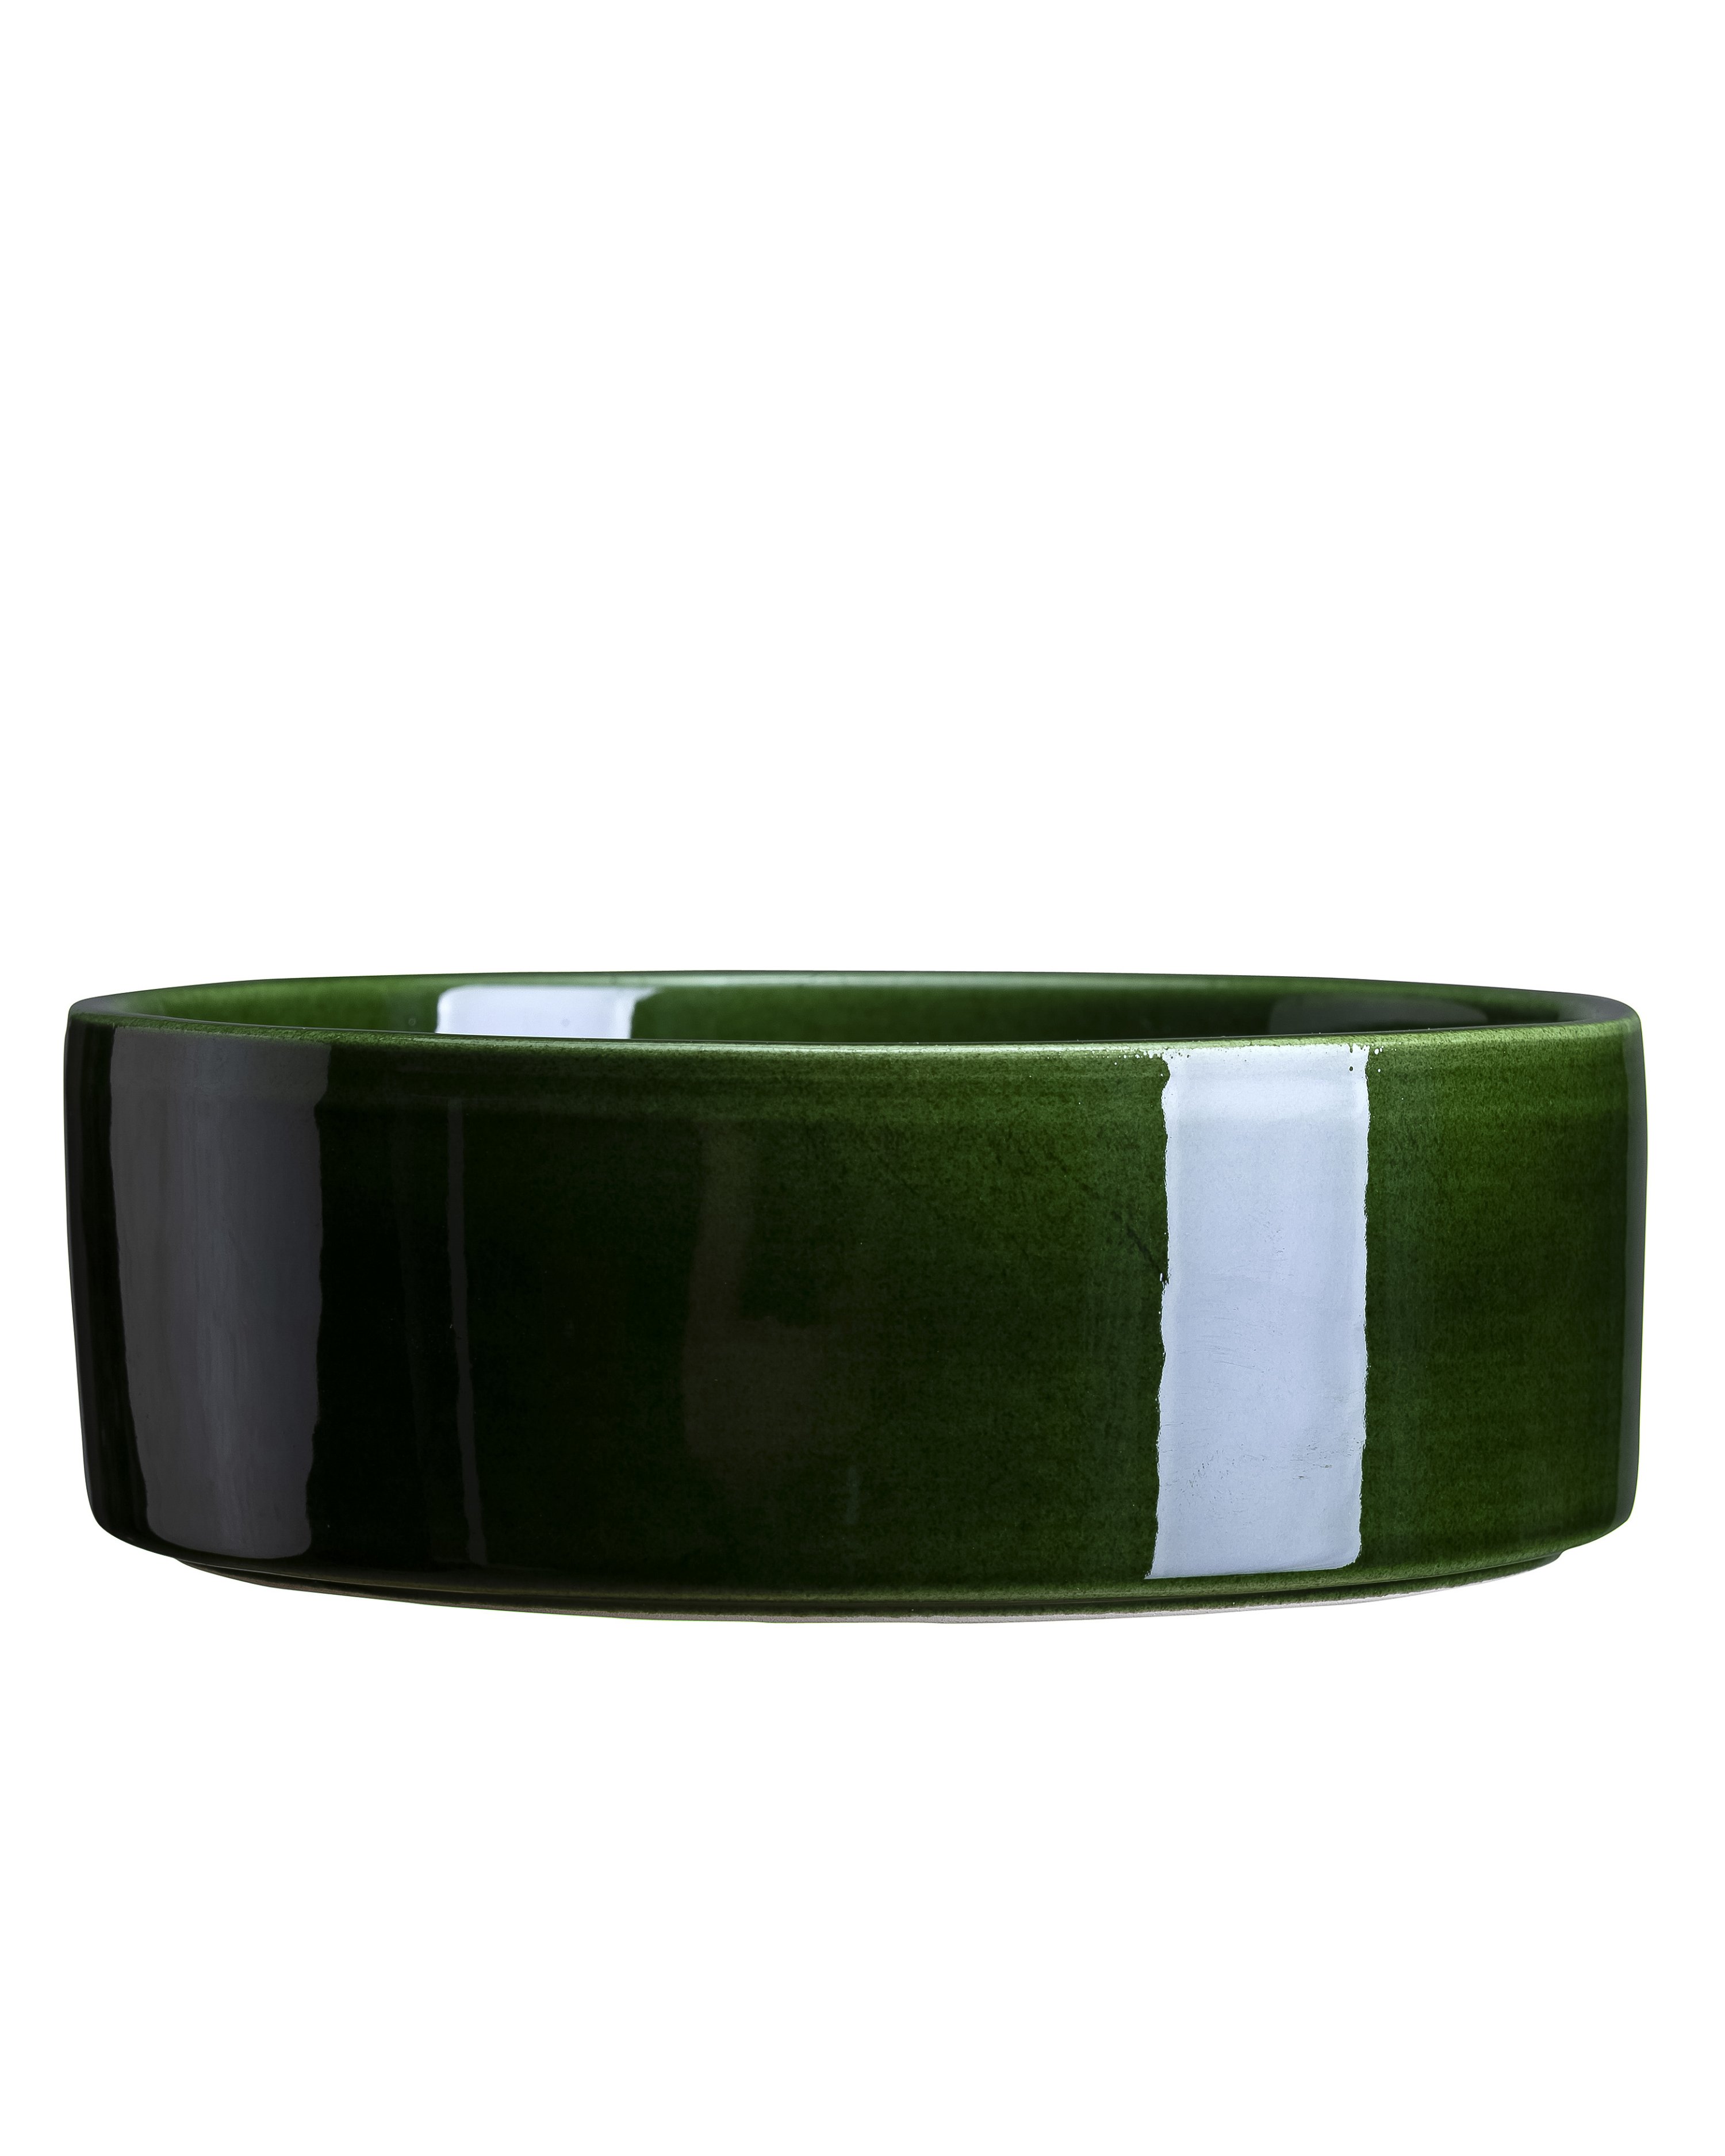 Bergs Potter, The Hoff Pot GLAZED: Emerald Green, 30 cm, Underfad